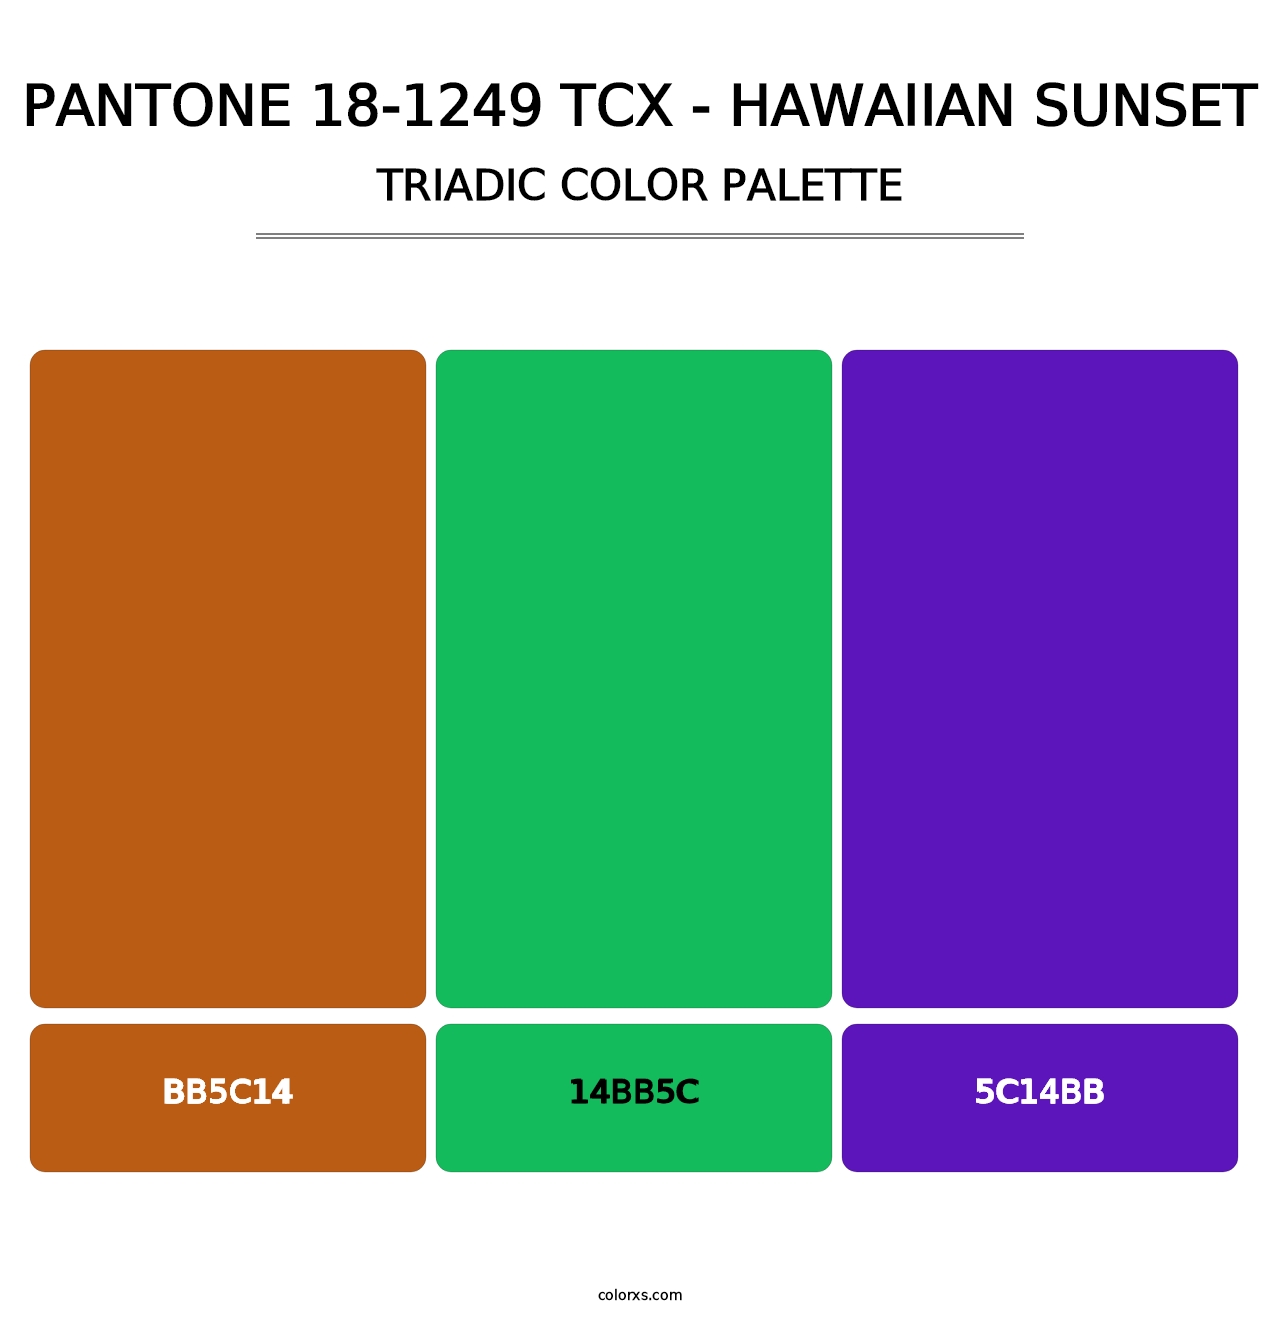 PANTONE 18-1249 TCX - Hawaiian Sunset - Triadic Color Palette